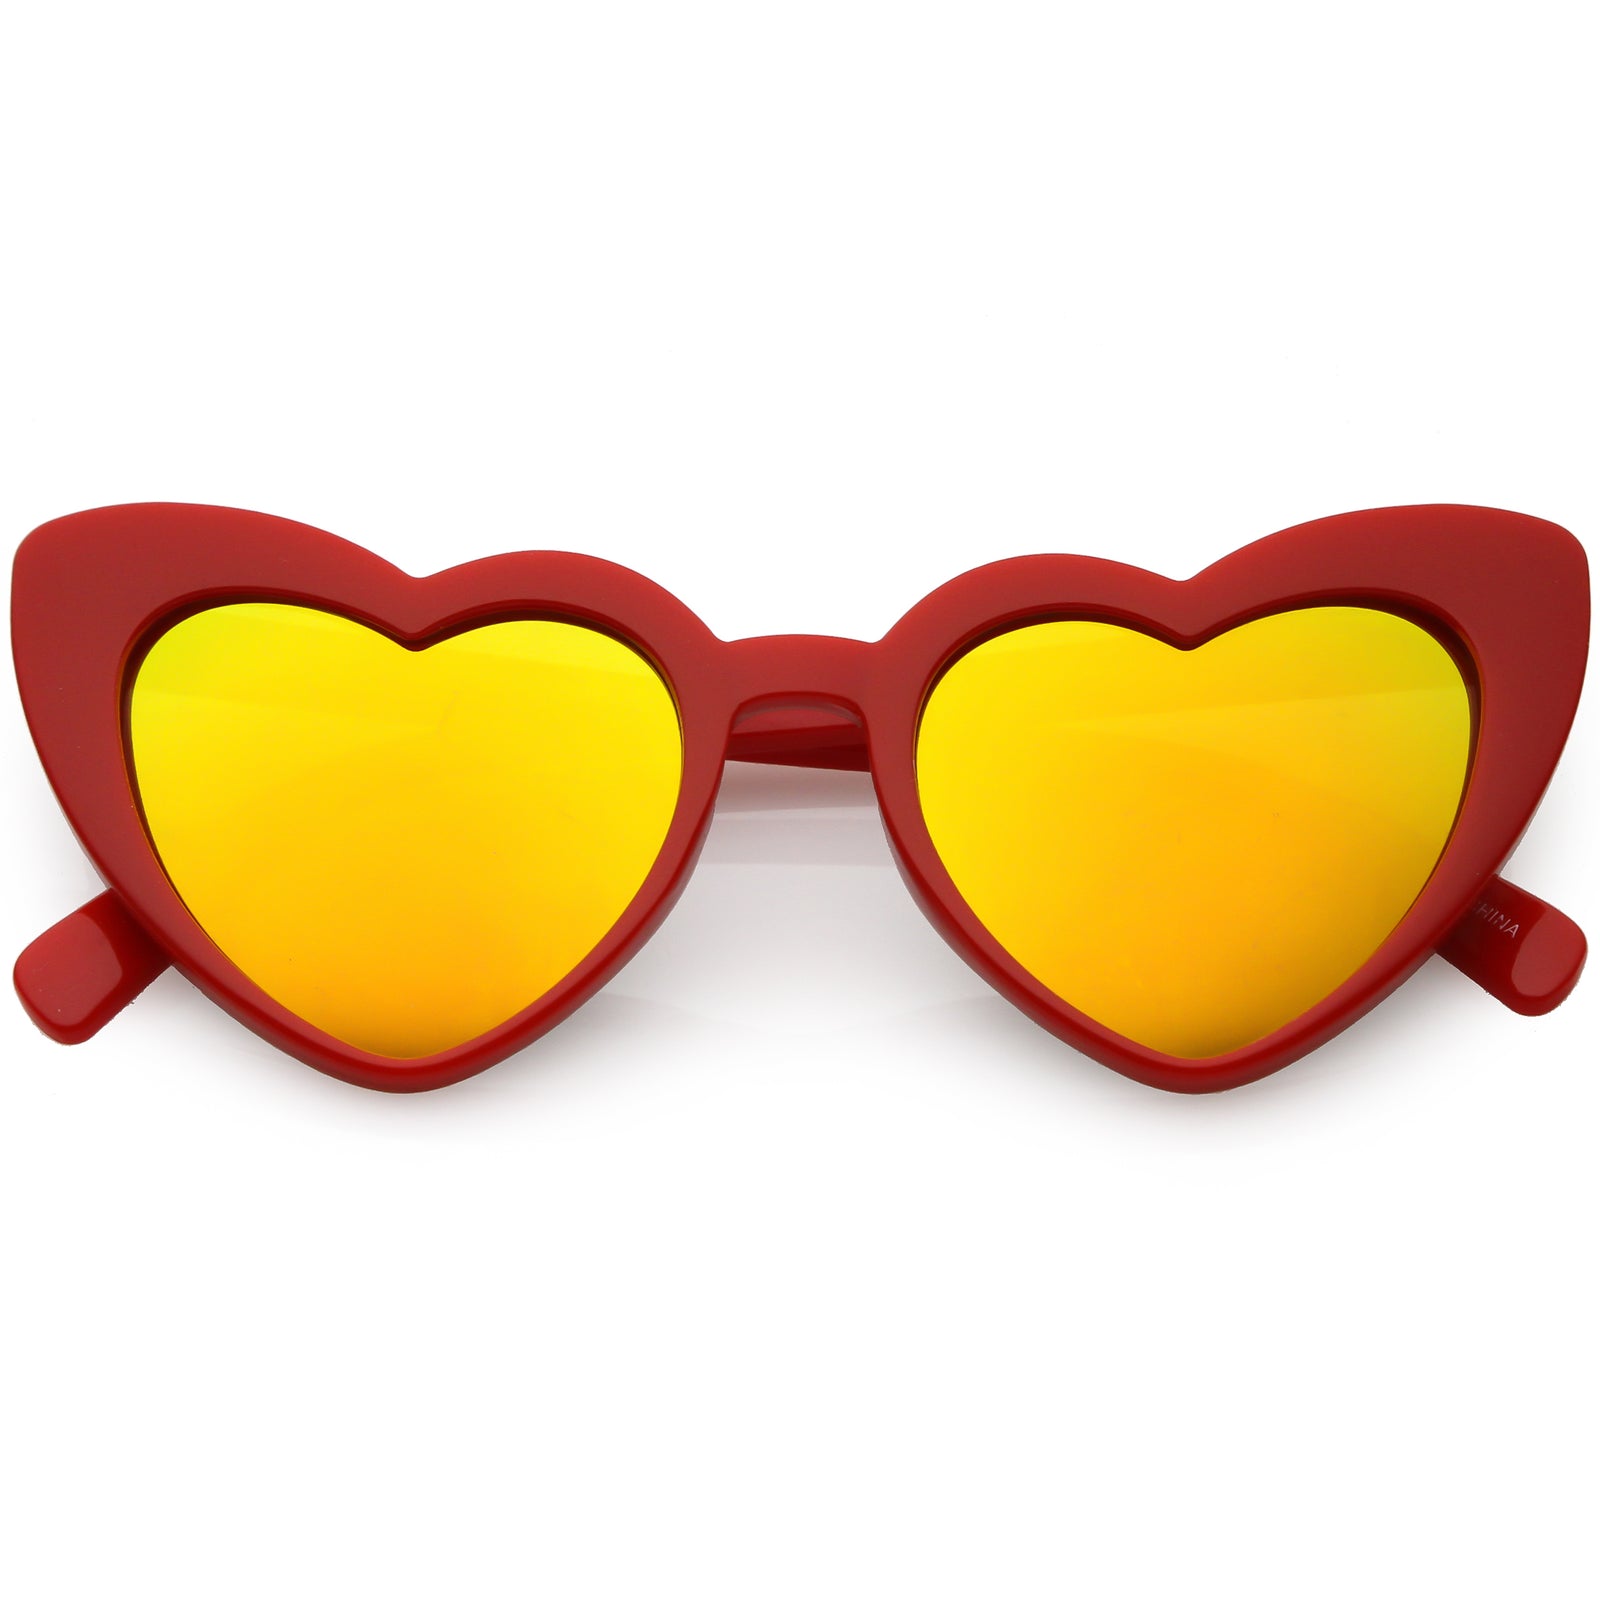 Oversized Rhinestone Square Frame Sunglasses REFFNB | Sunglass frames,  Square frames, Heart shaped glasses